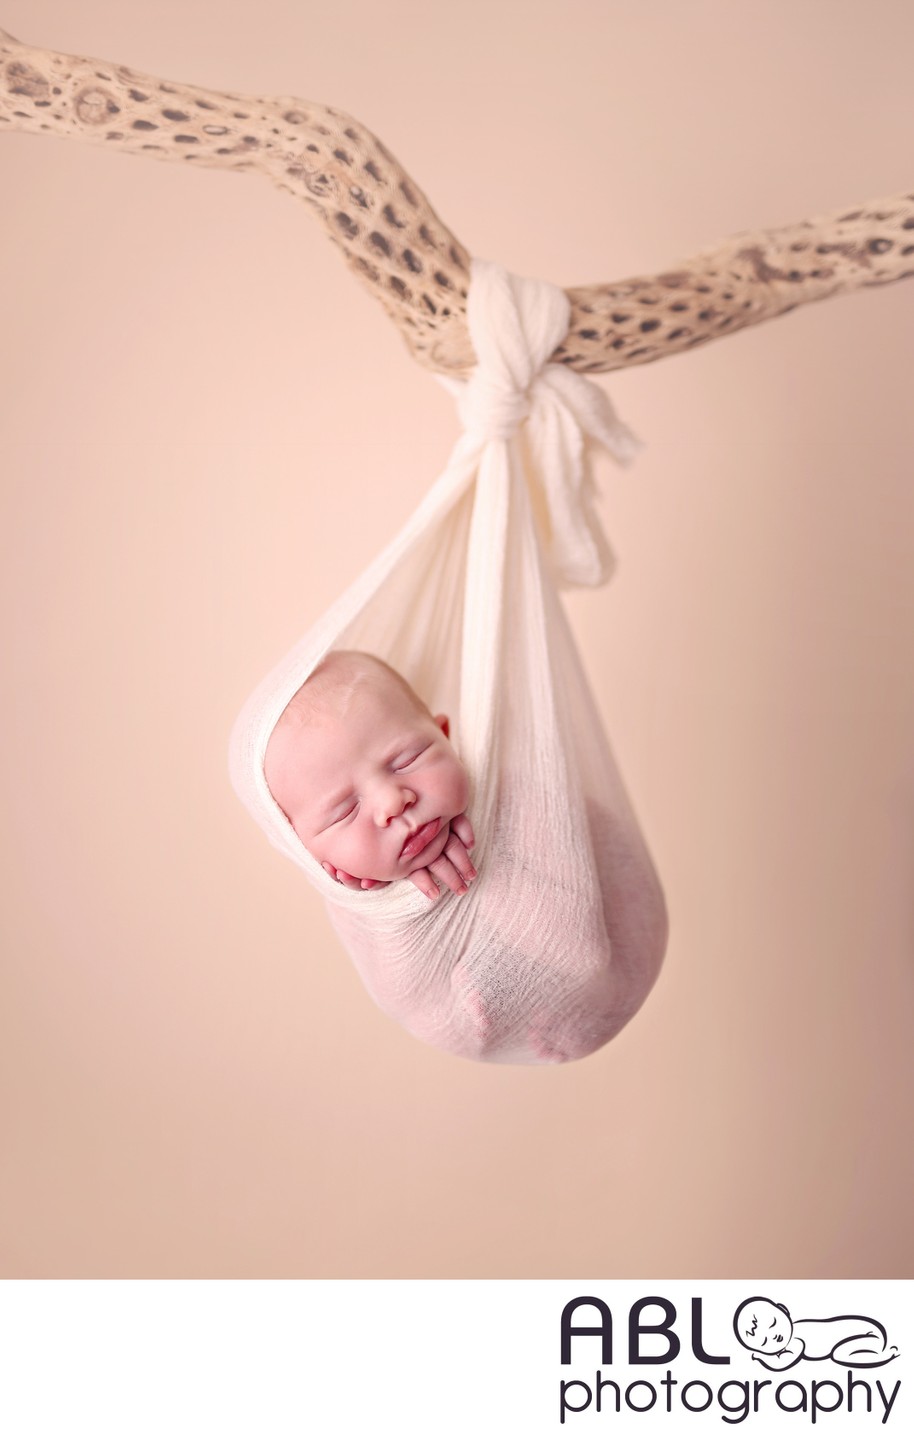 Newborn hanging on tree branch